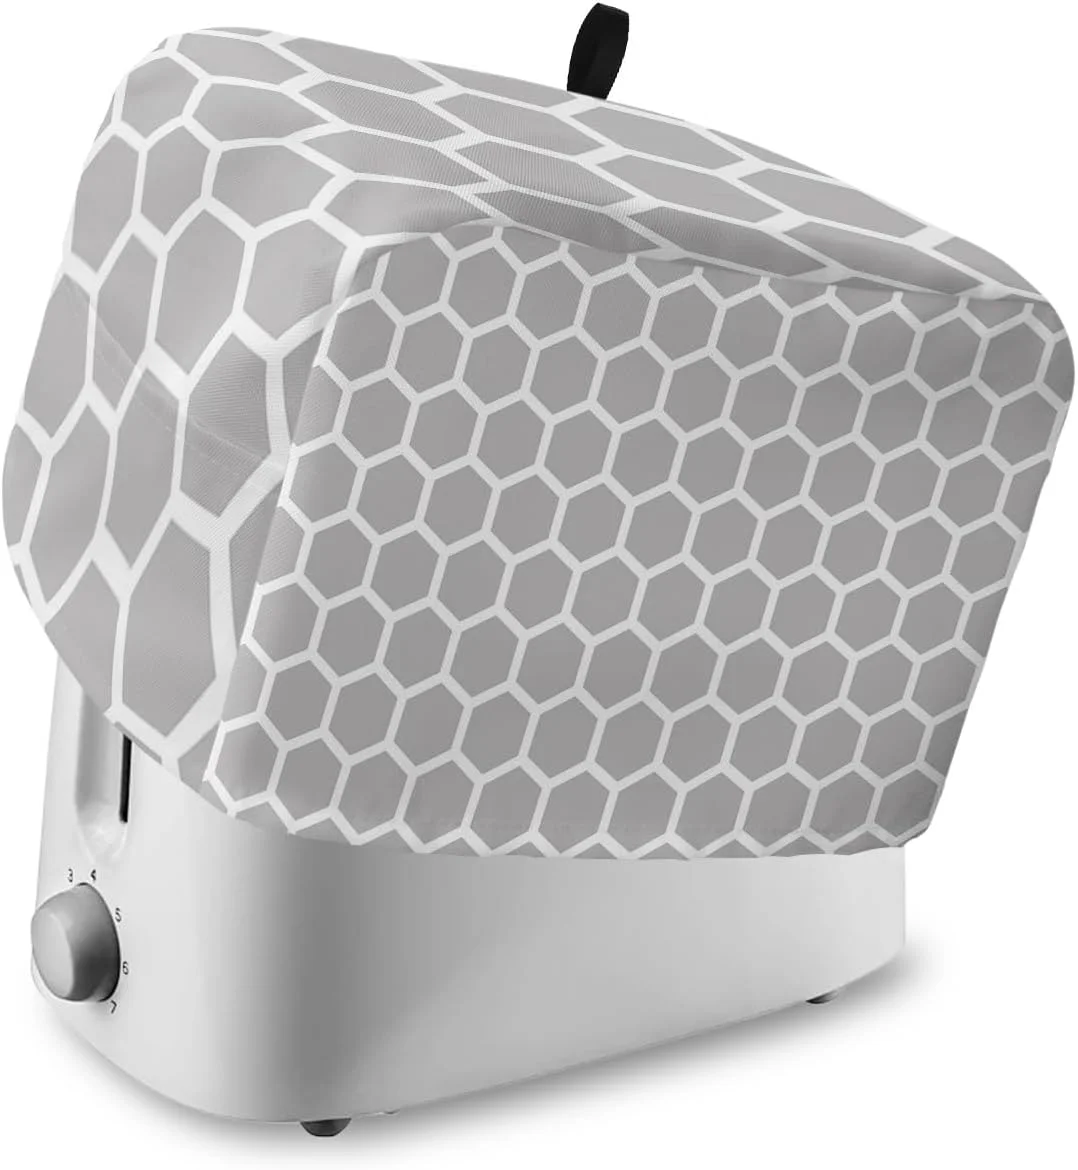 Toaster Covers 2 Slice Retro Moroccan Design Review